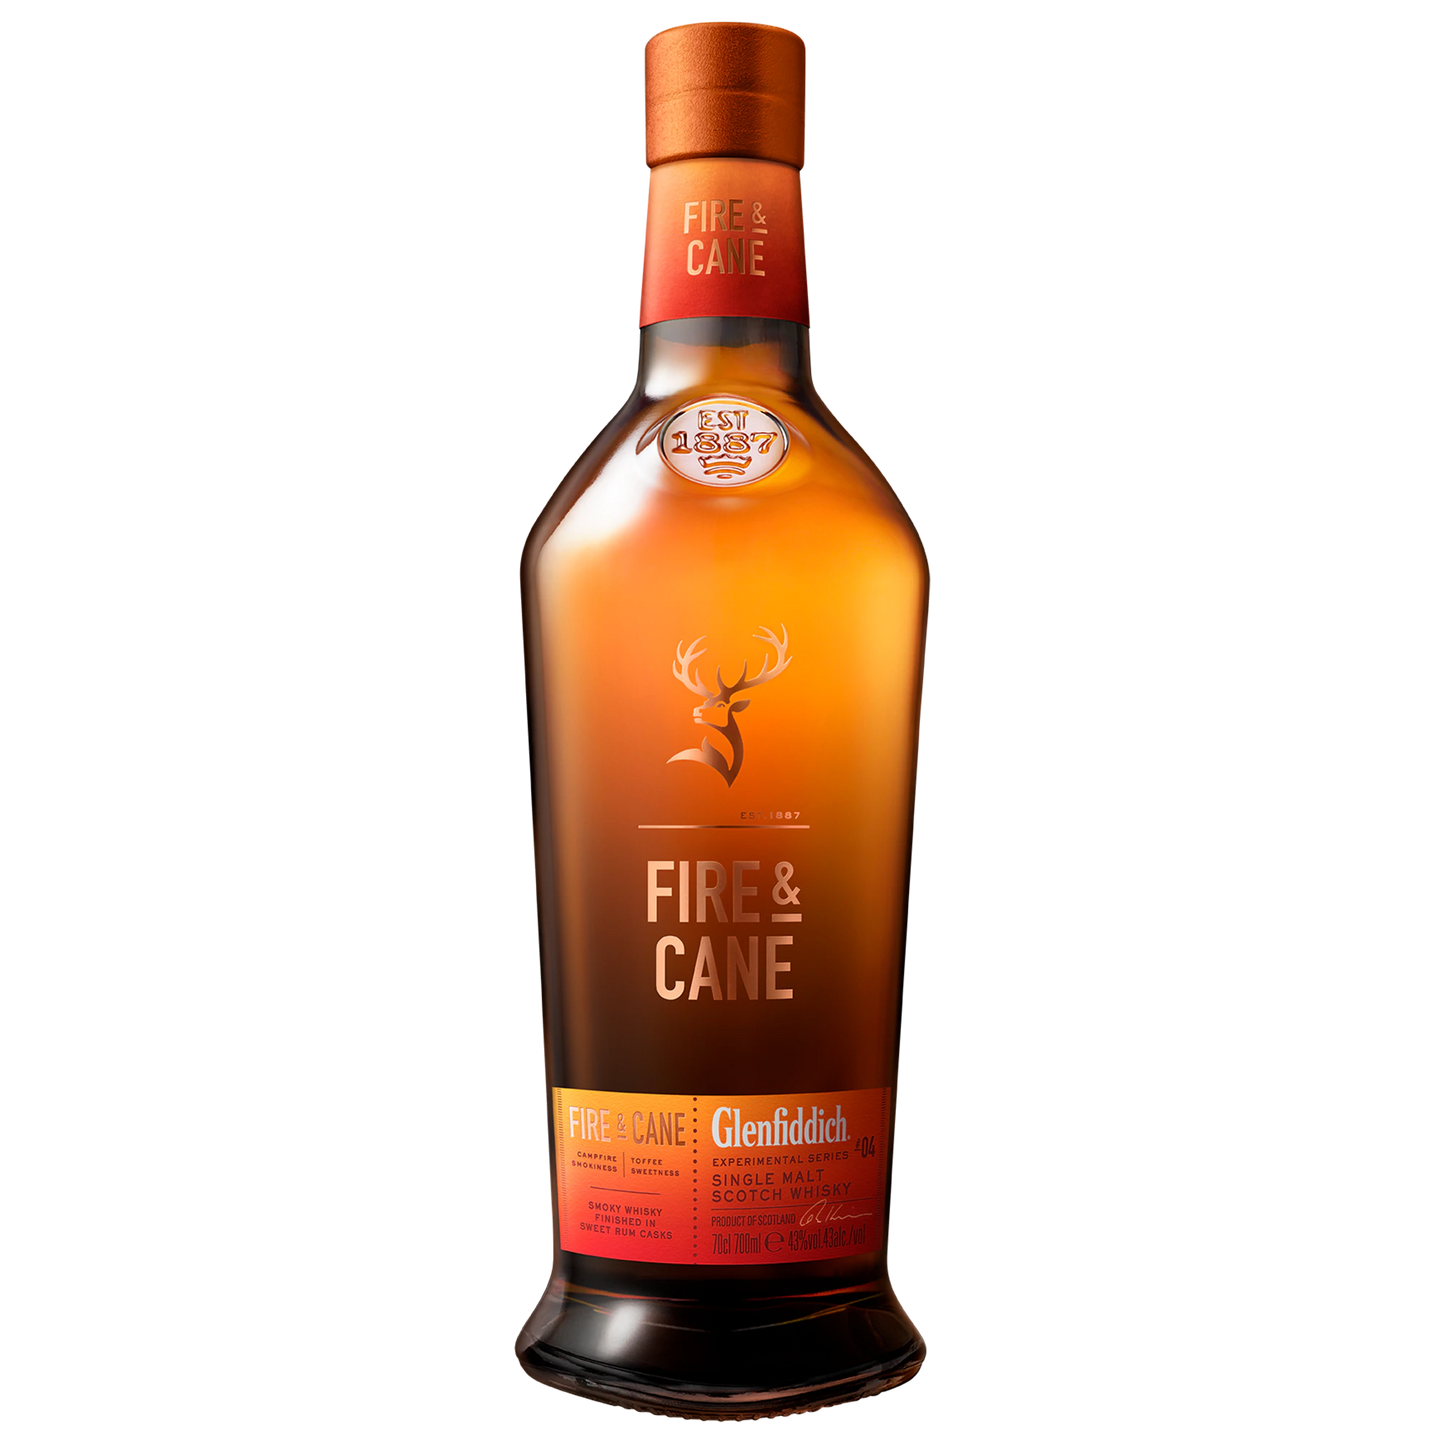 Glenfiddich Fire & Cane Single Malt Scotch Whisky 700ml